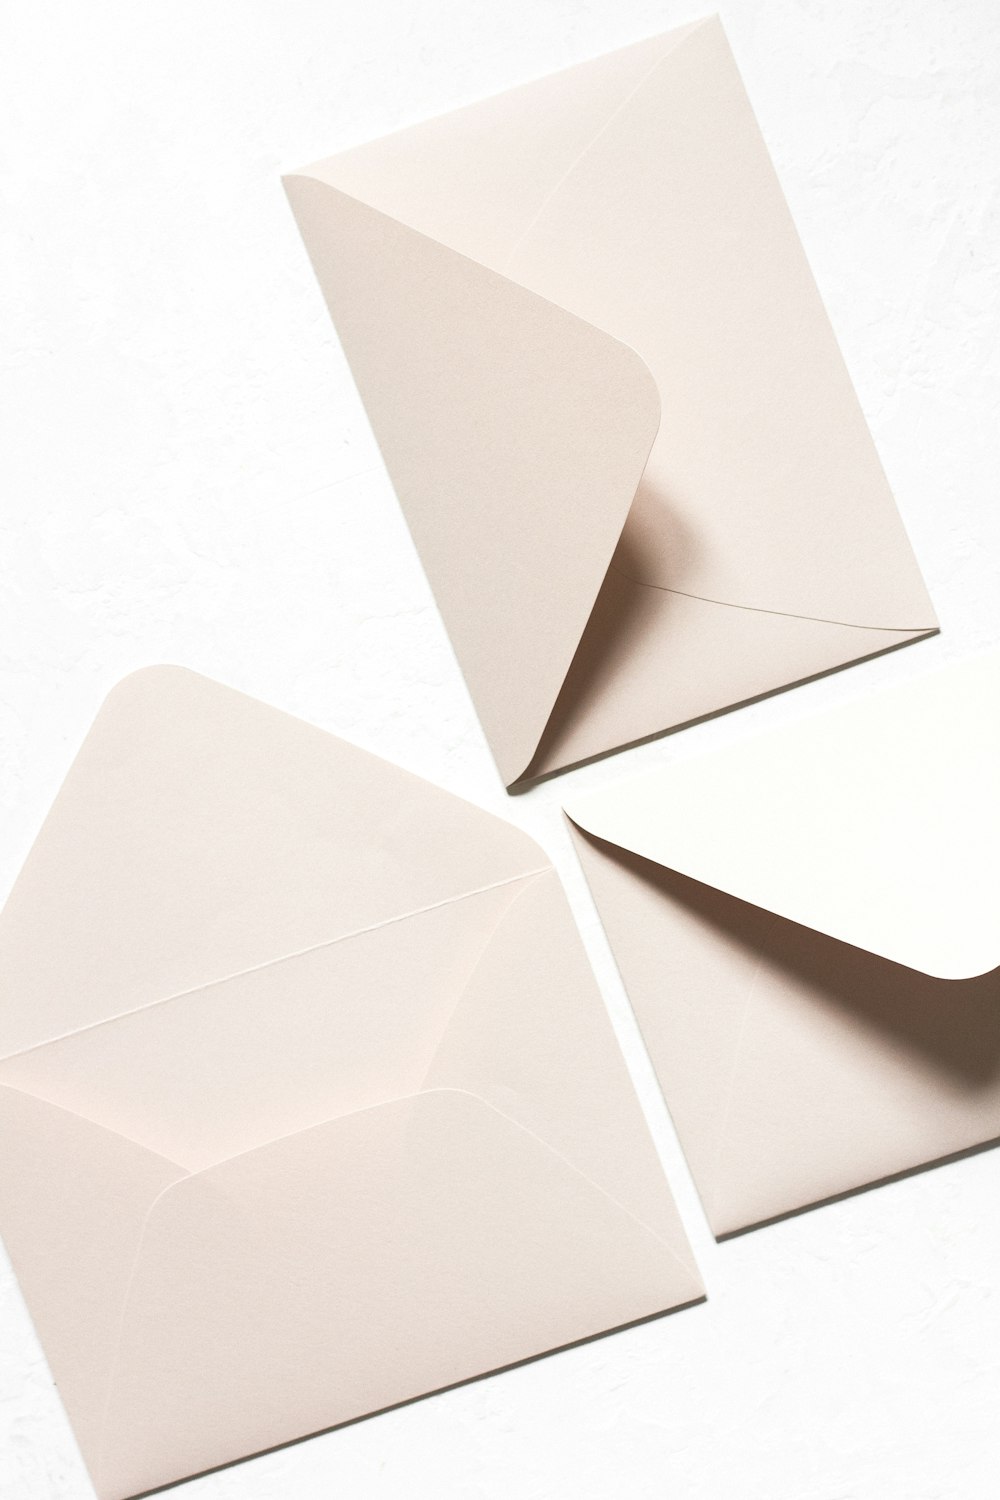 three white mail envelops